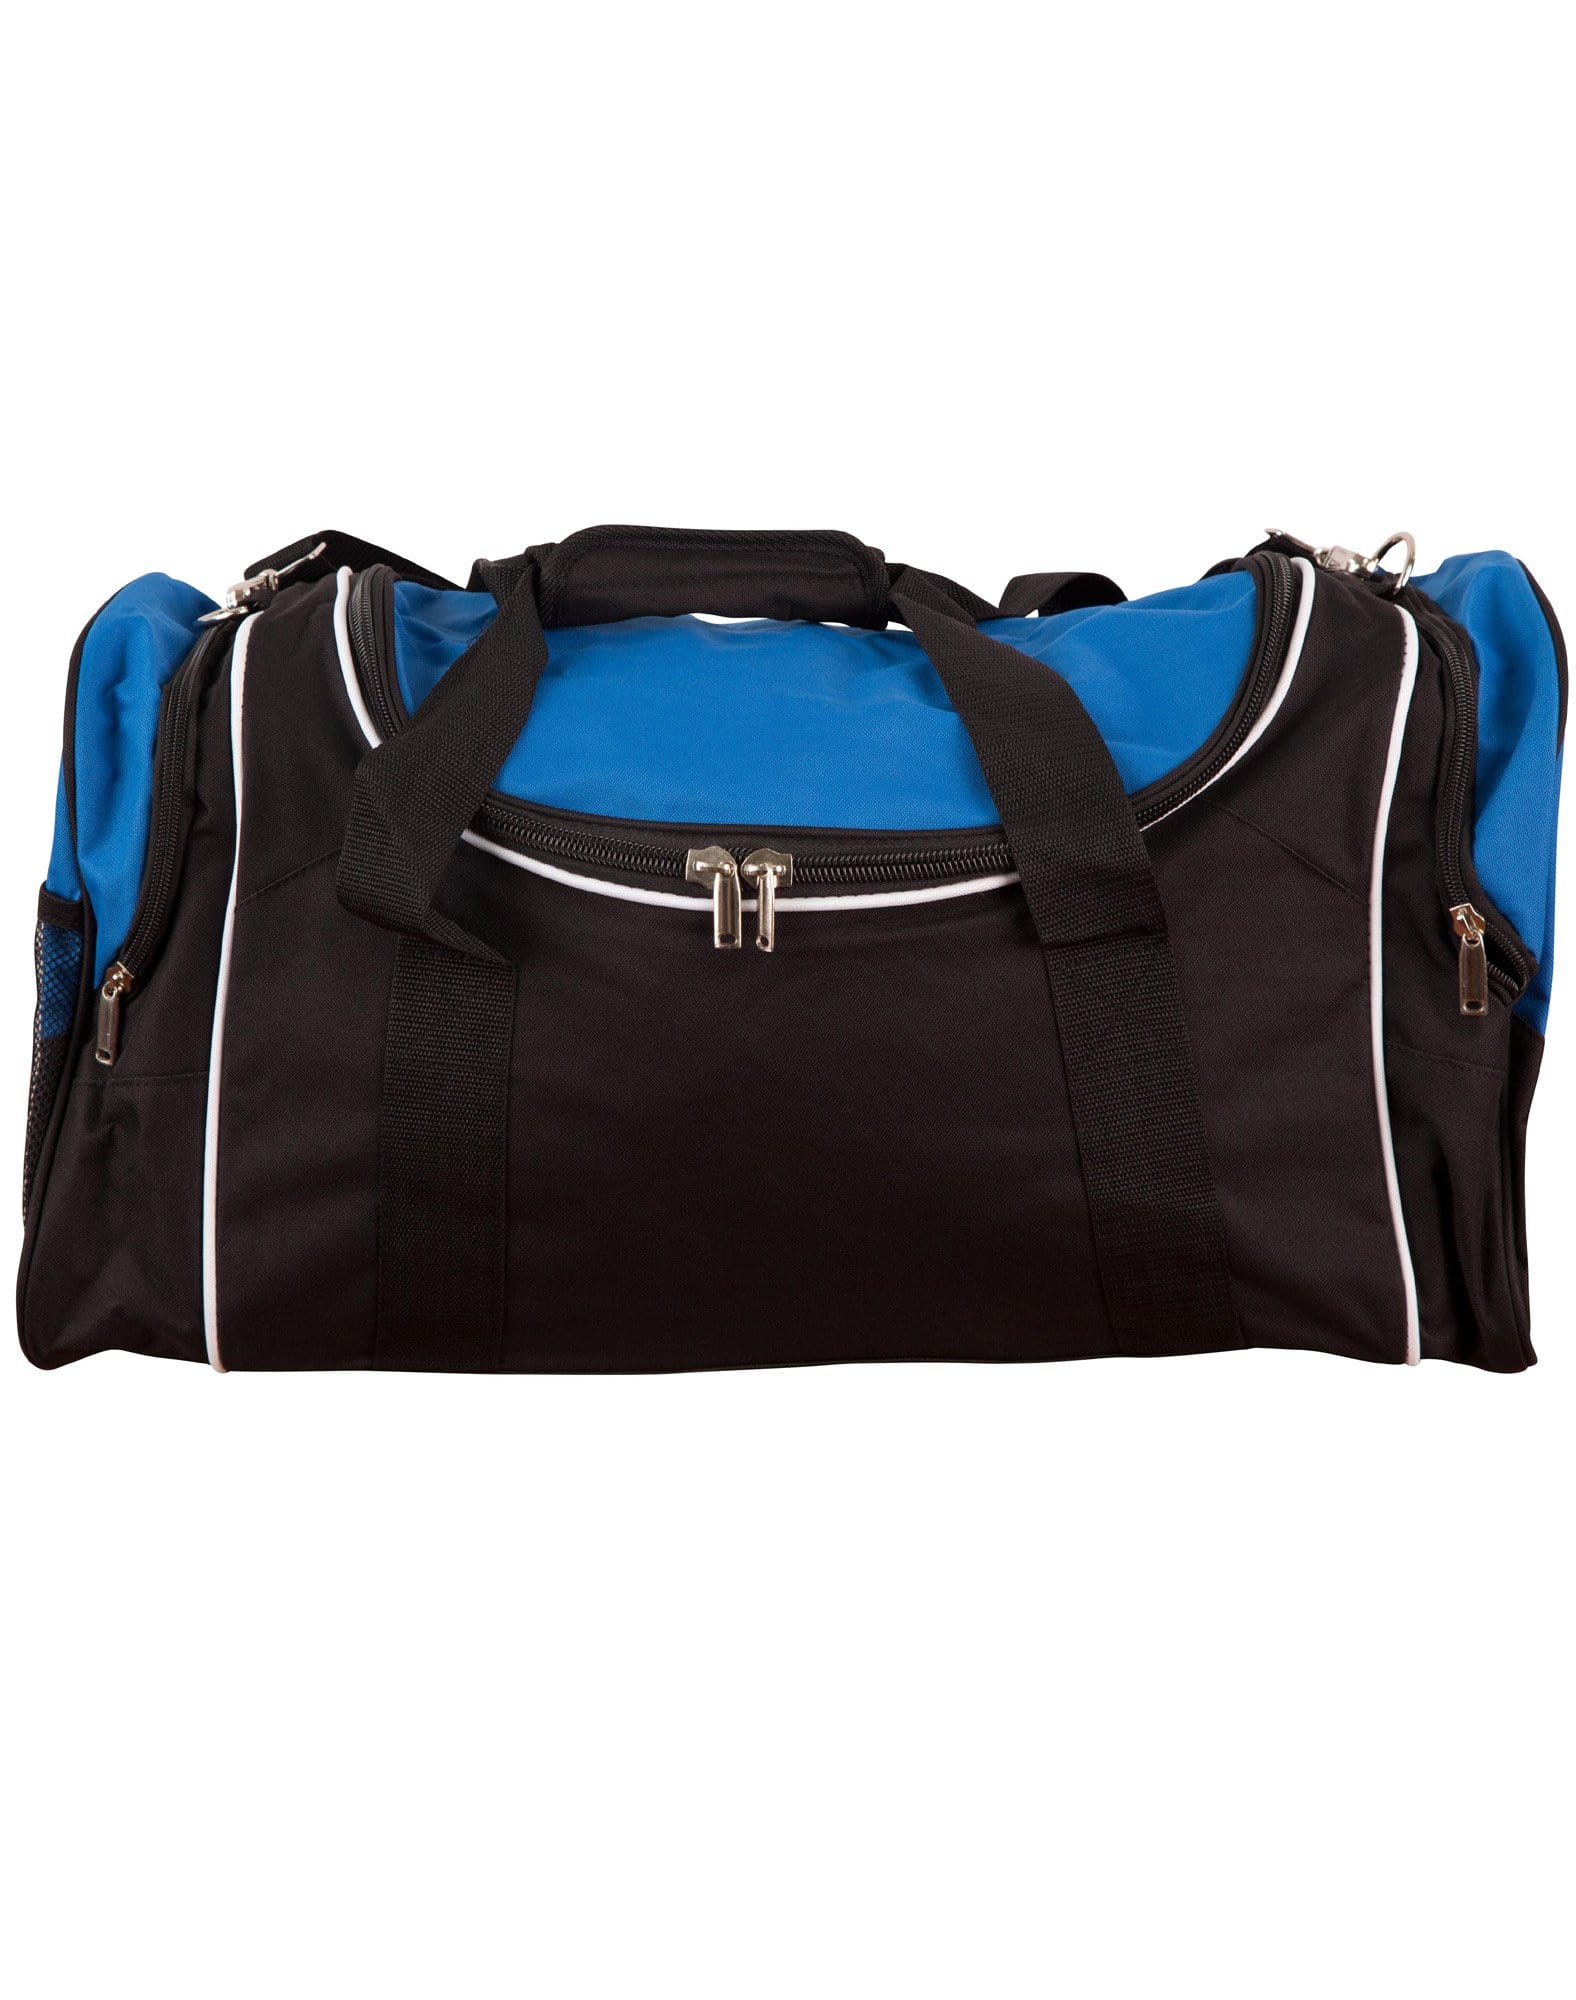 Winner Sports/ Travel Bag B2020 Active Wear Winning Spirit Black/White/Royal "(w)65cm x (h)32cm x (d)27cm, 56.2 Litres Capacity" 